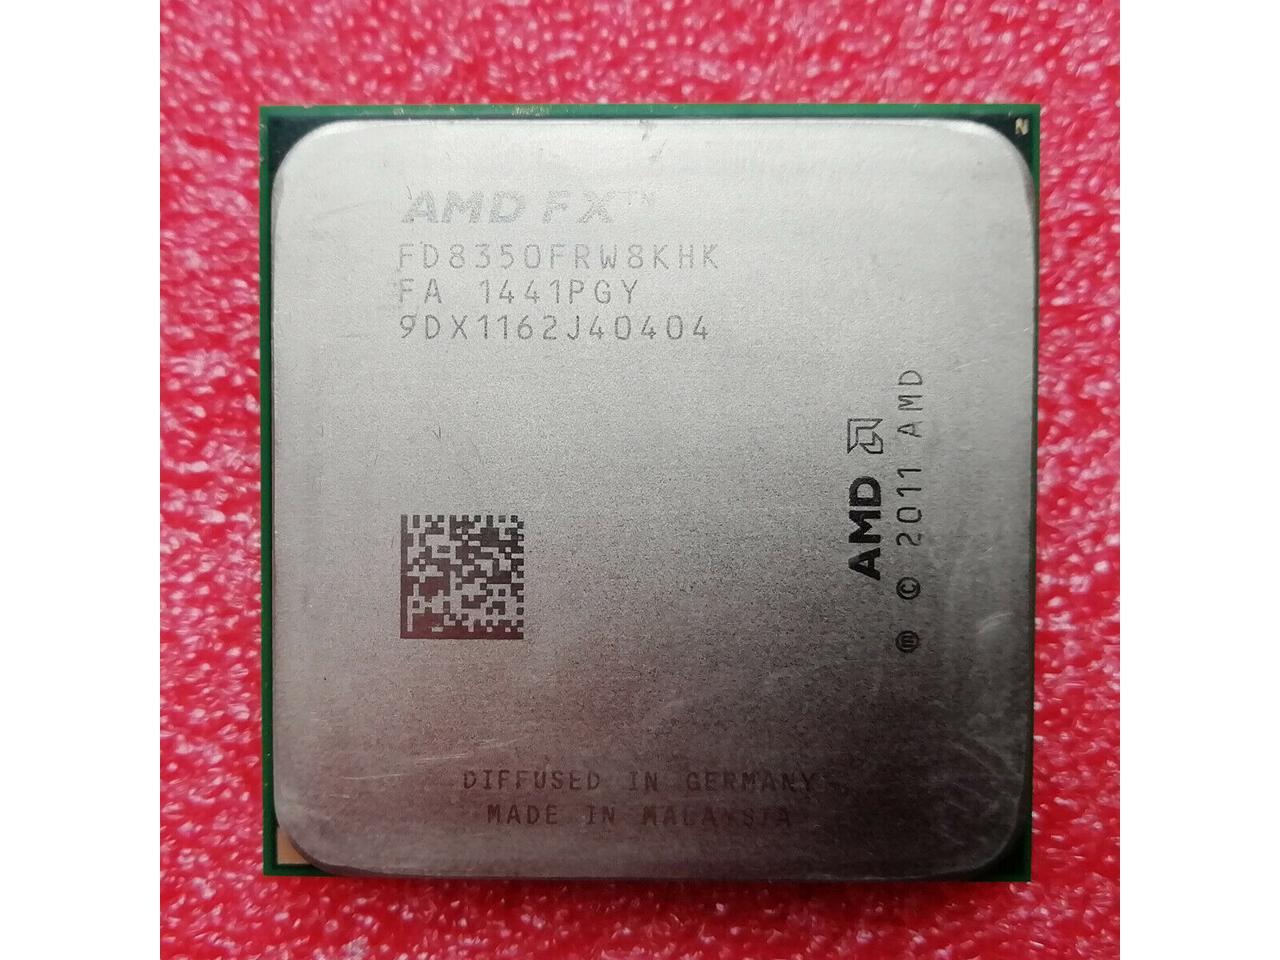 AMD FX-8350 Black Edition Vishera 8-Core 4.0 GHz (Turbo) CPU Processor -  Newegg.com